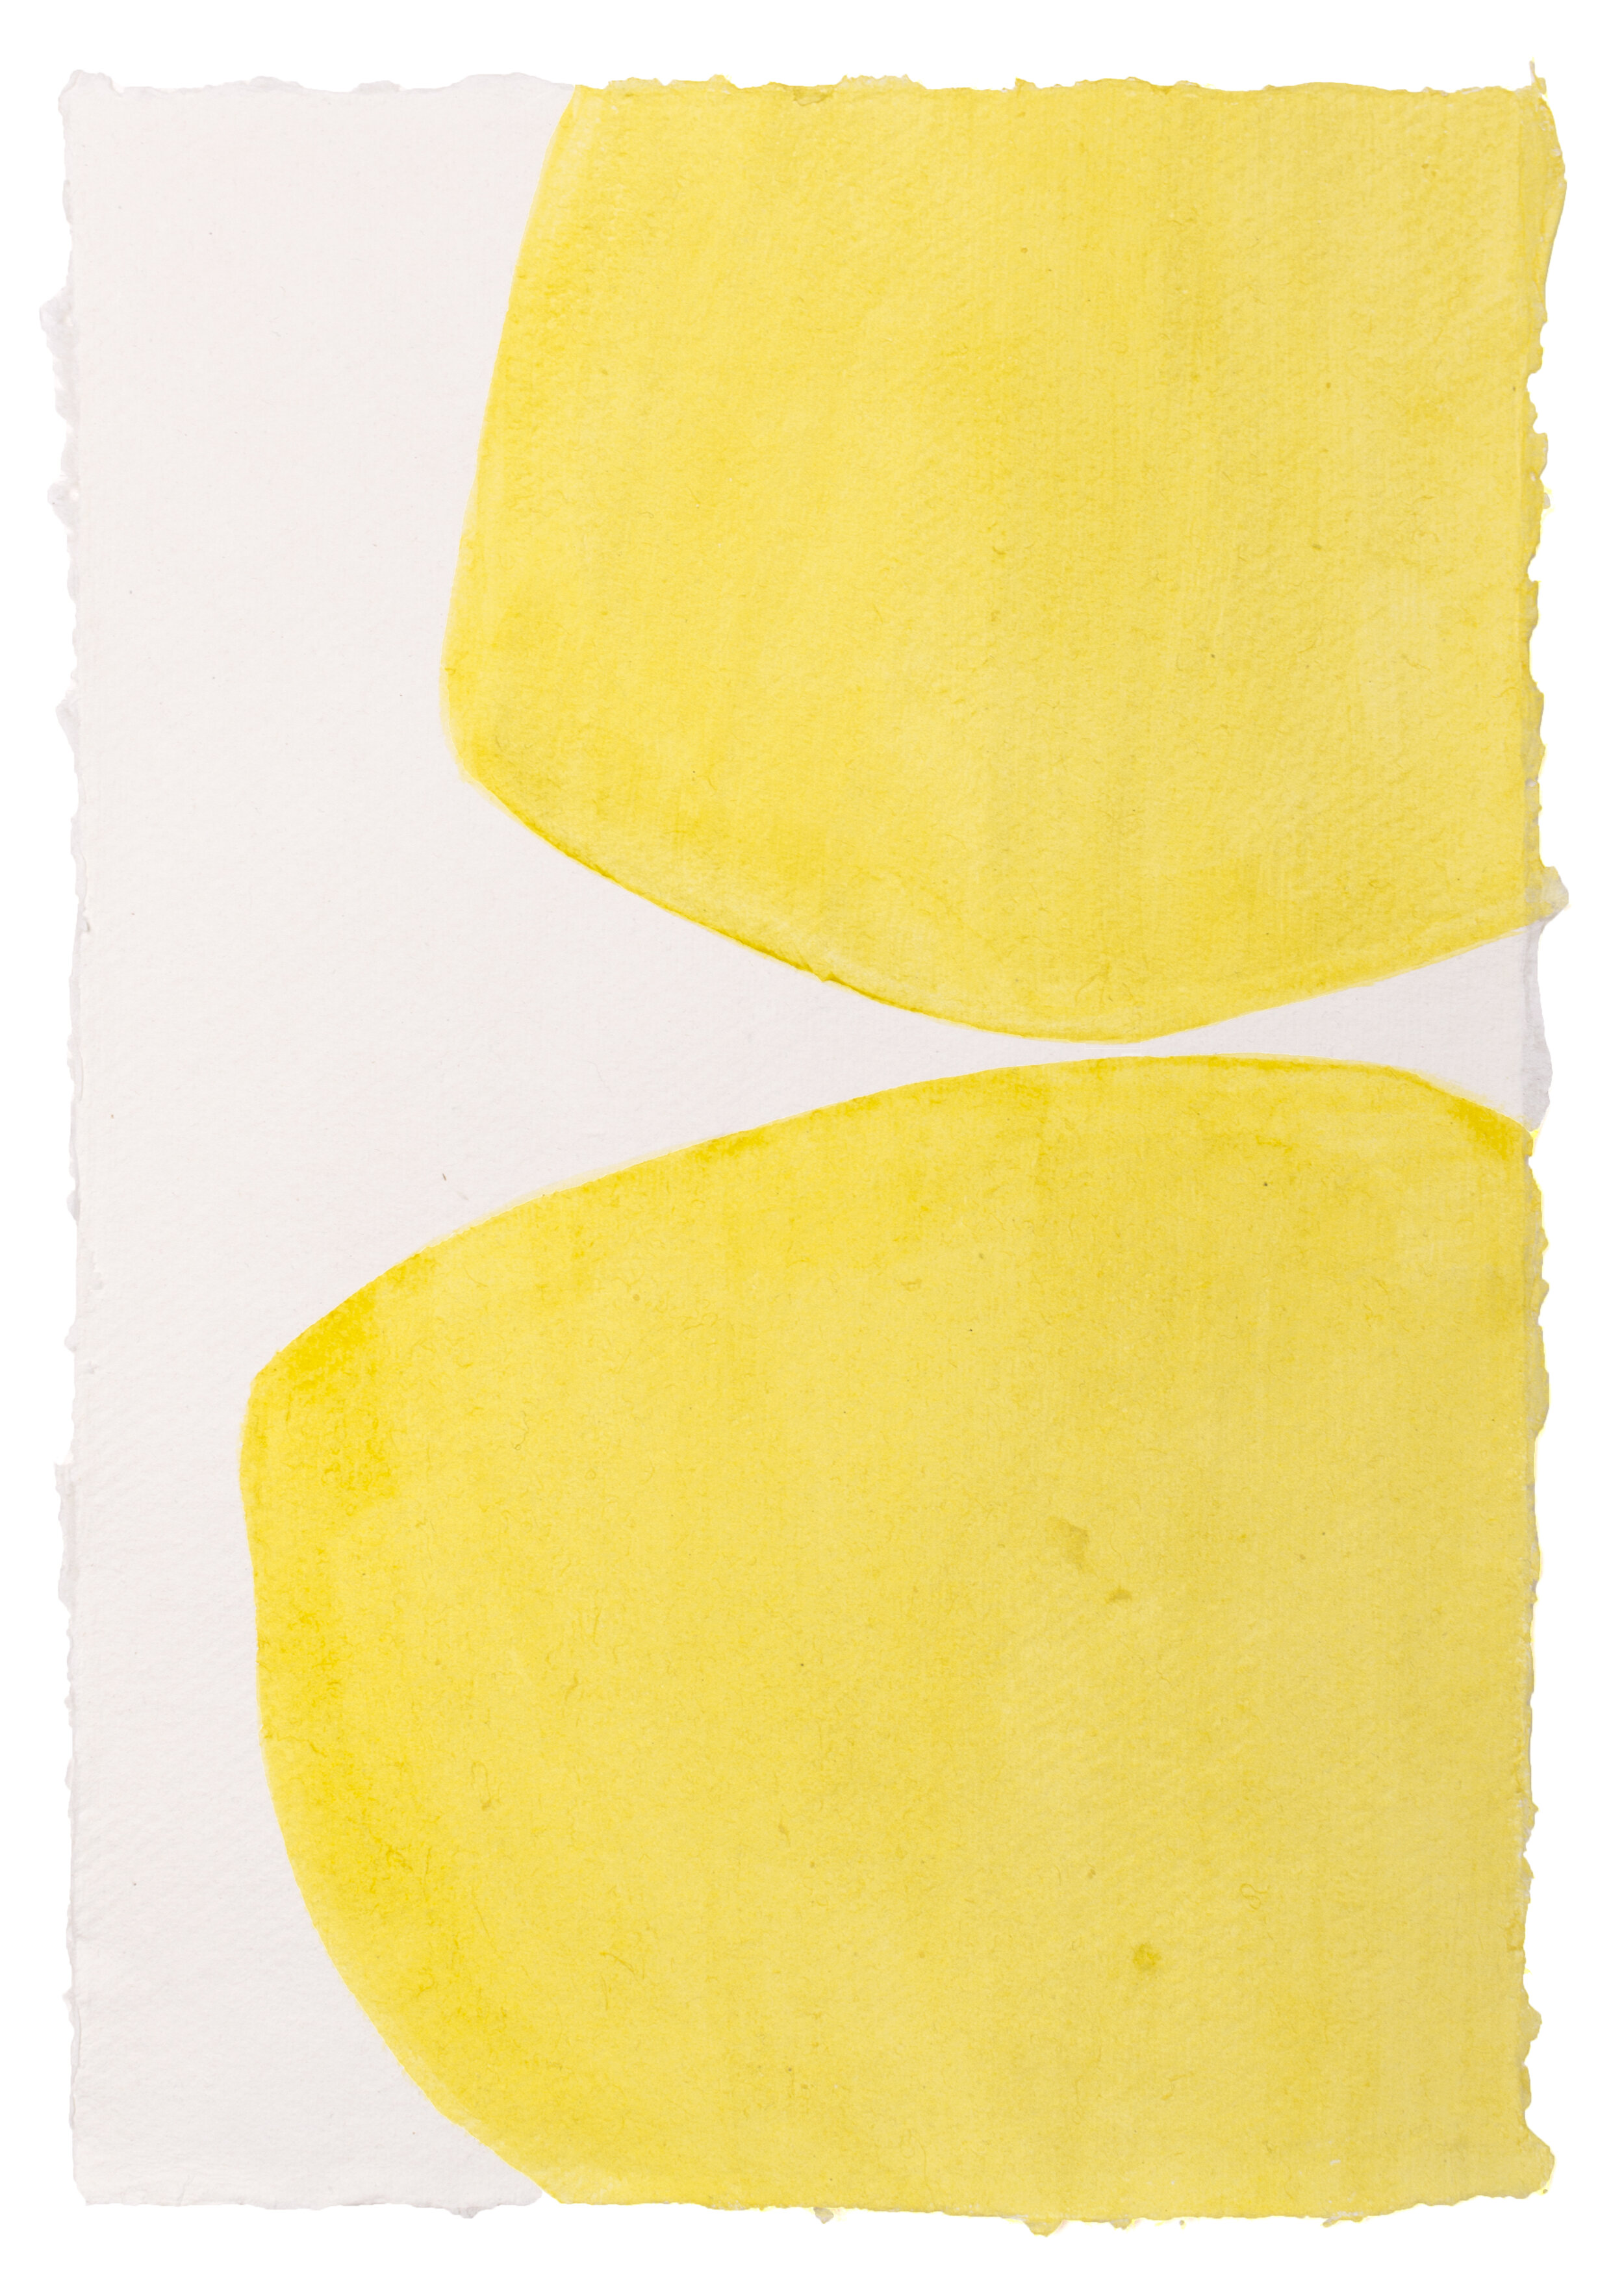 Untitled (Yellow)